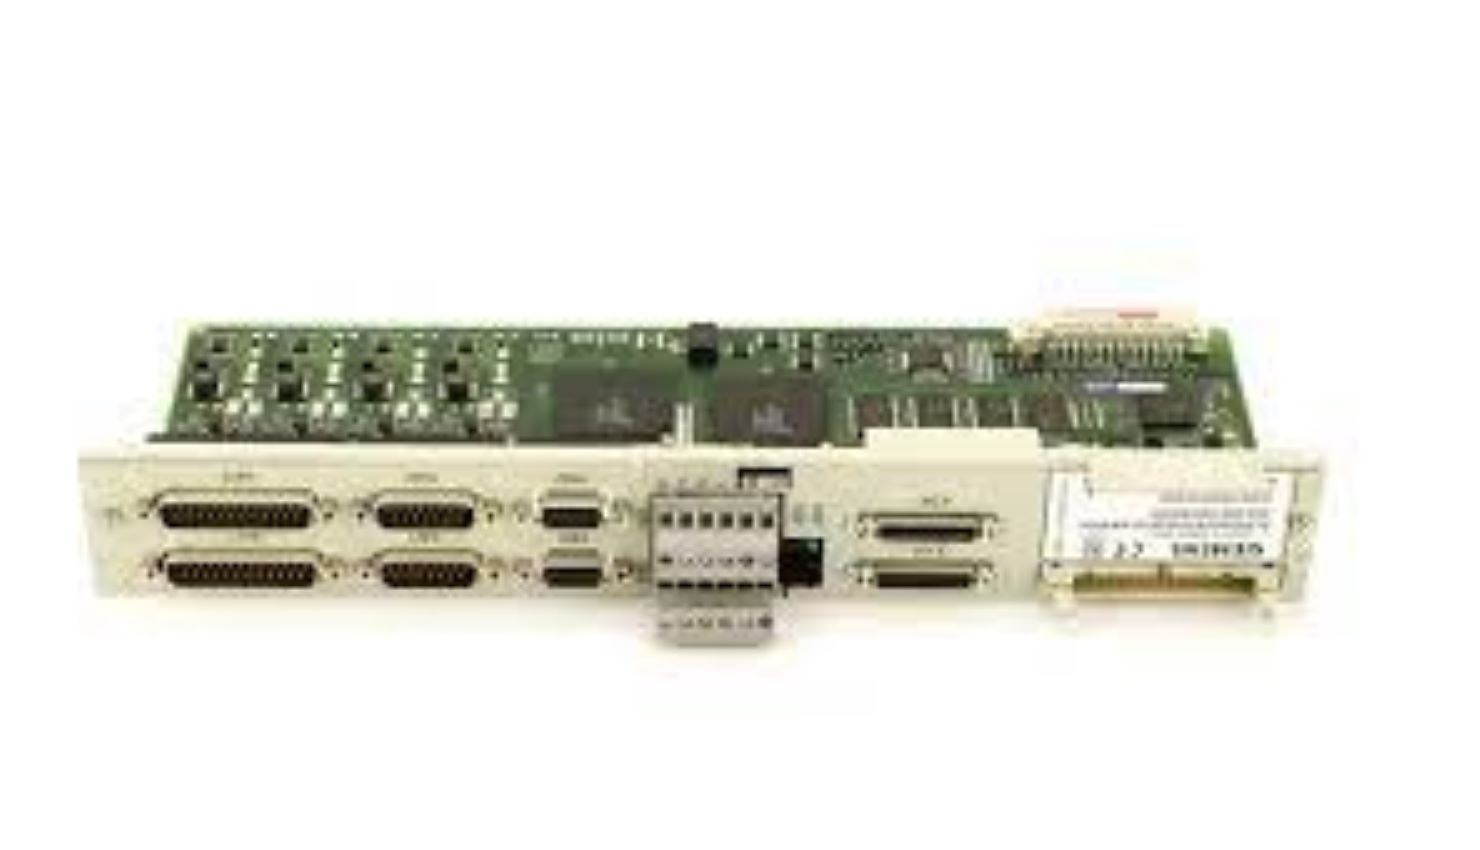 6SN11180DM330AA2-siemens programmable logic controller